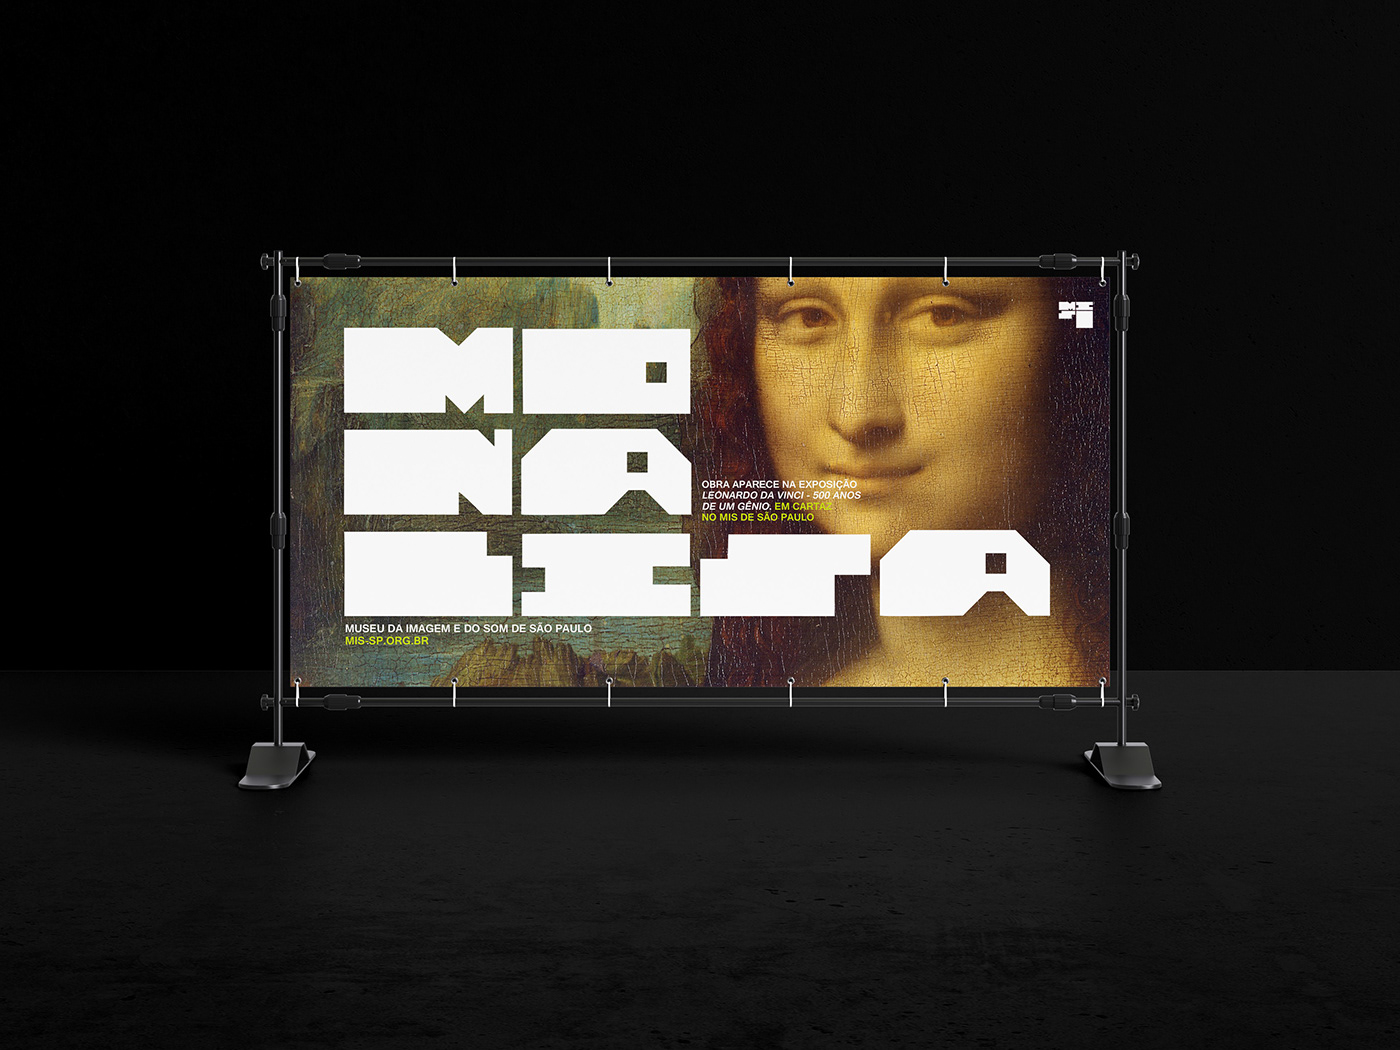 art Museu museum Exhibition  Museum Design rebrading tipography brand identity marketing   Logo Design